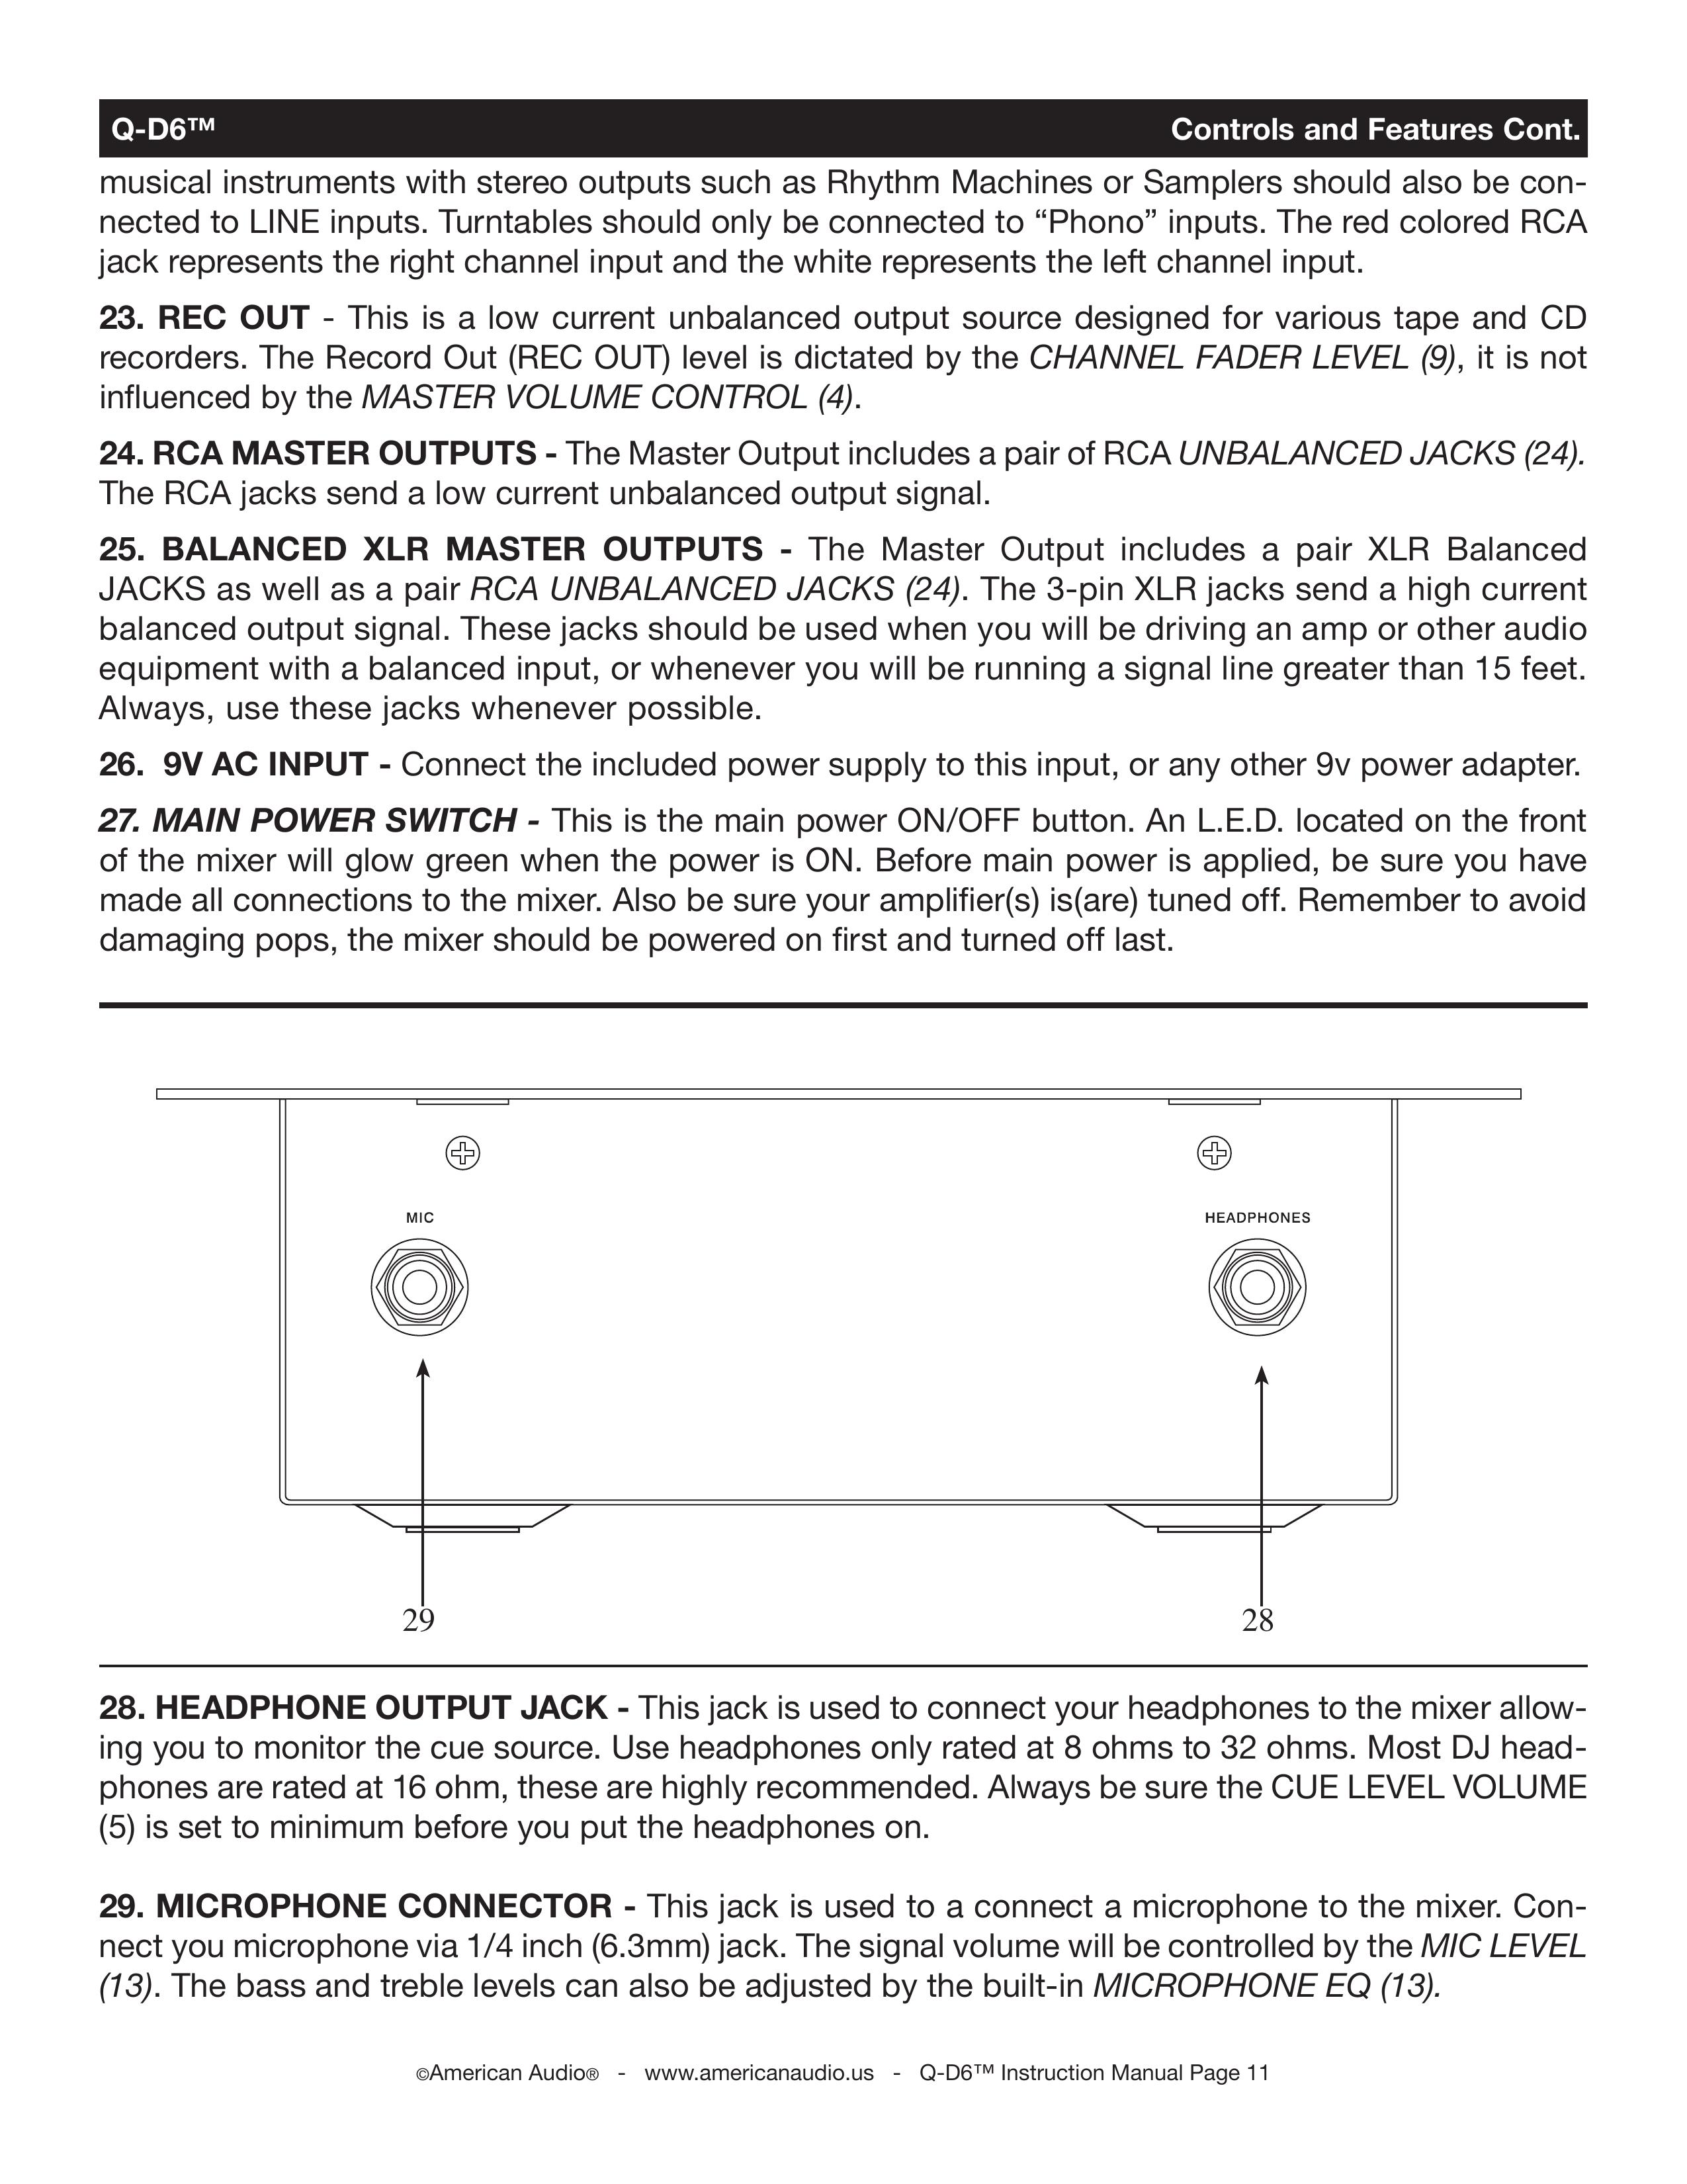 American Audio q-d6 DJ Equipment User Manual (Page 11)